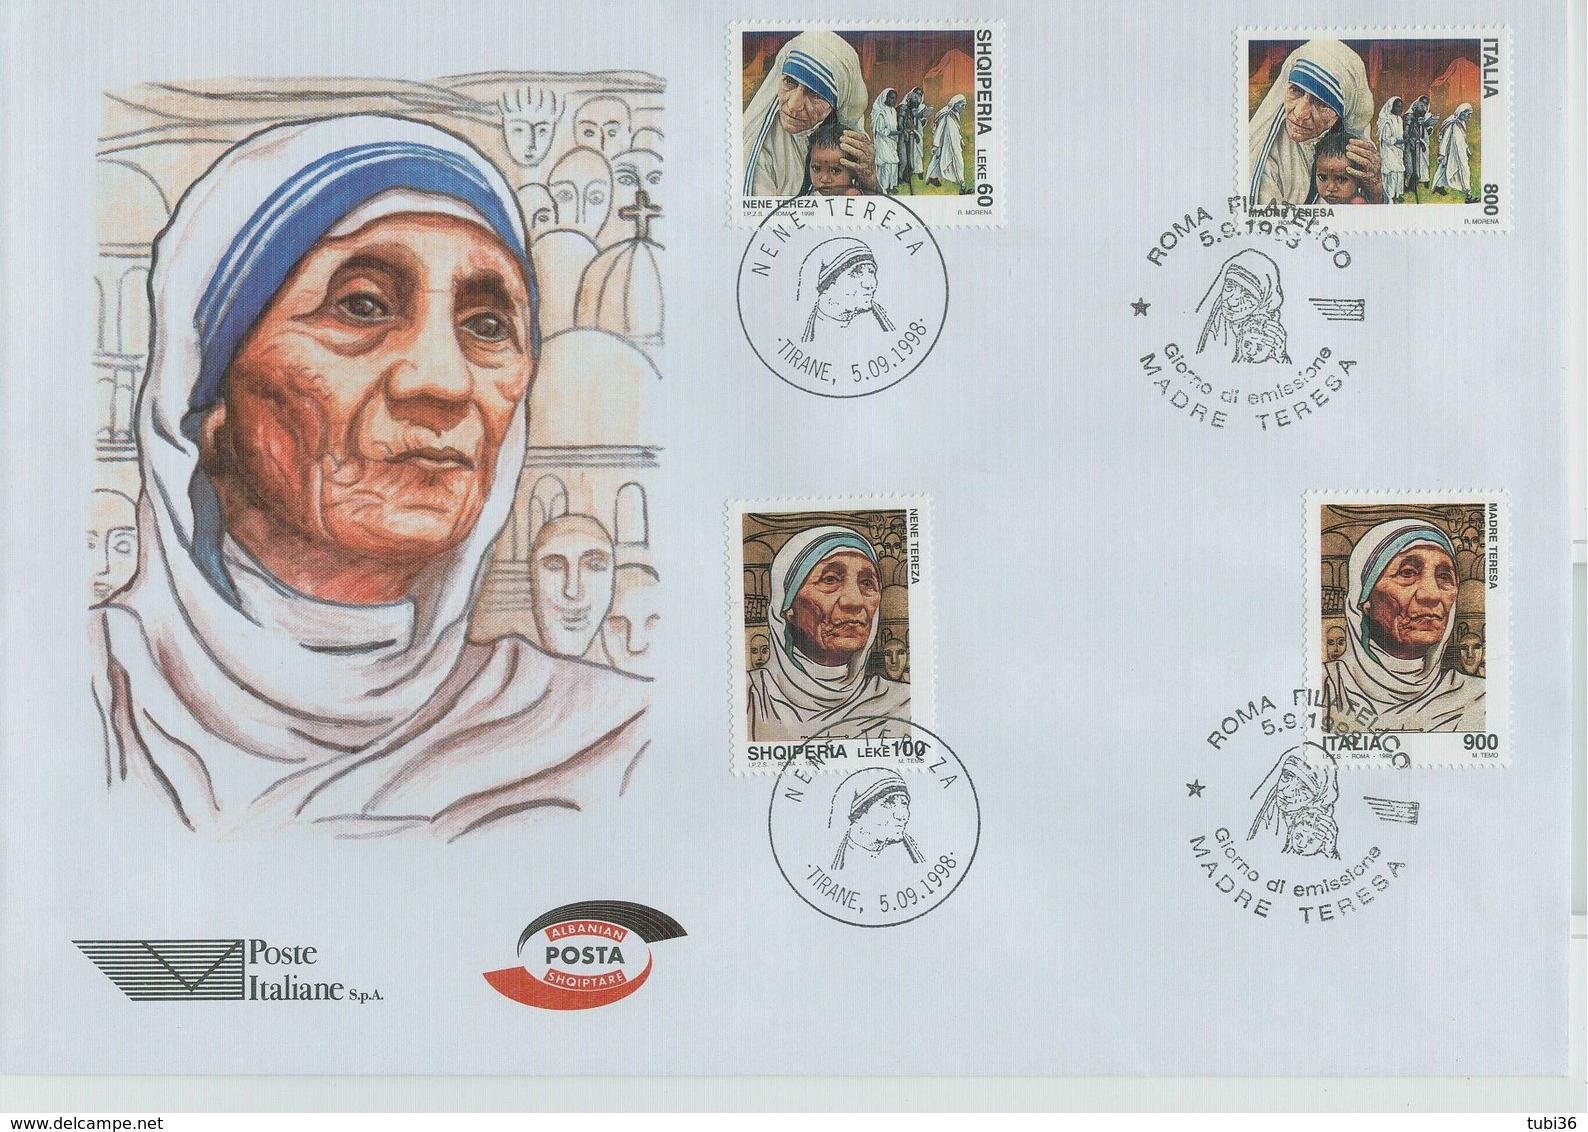 MADRE TERESA-EMISSIONE CONGIUNTA 1998 -TIMBRO  POSTE ITALIA-ALBANIA- - Madre Teresa